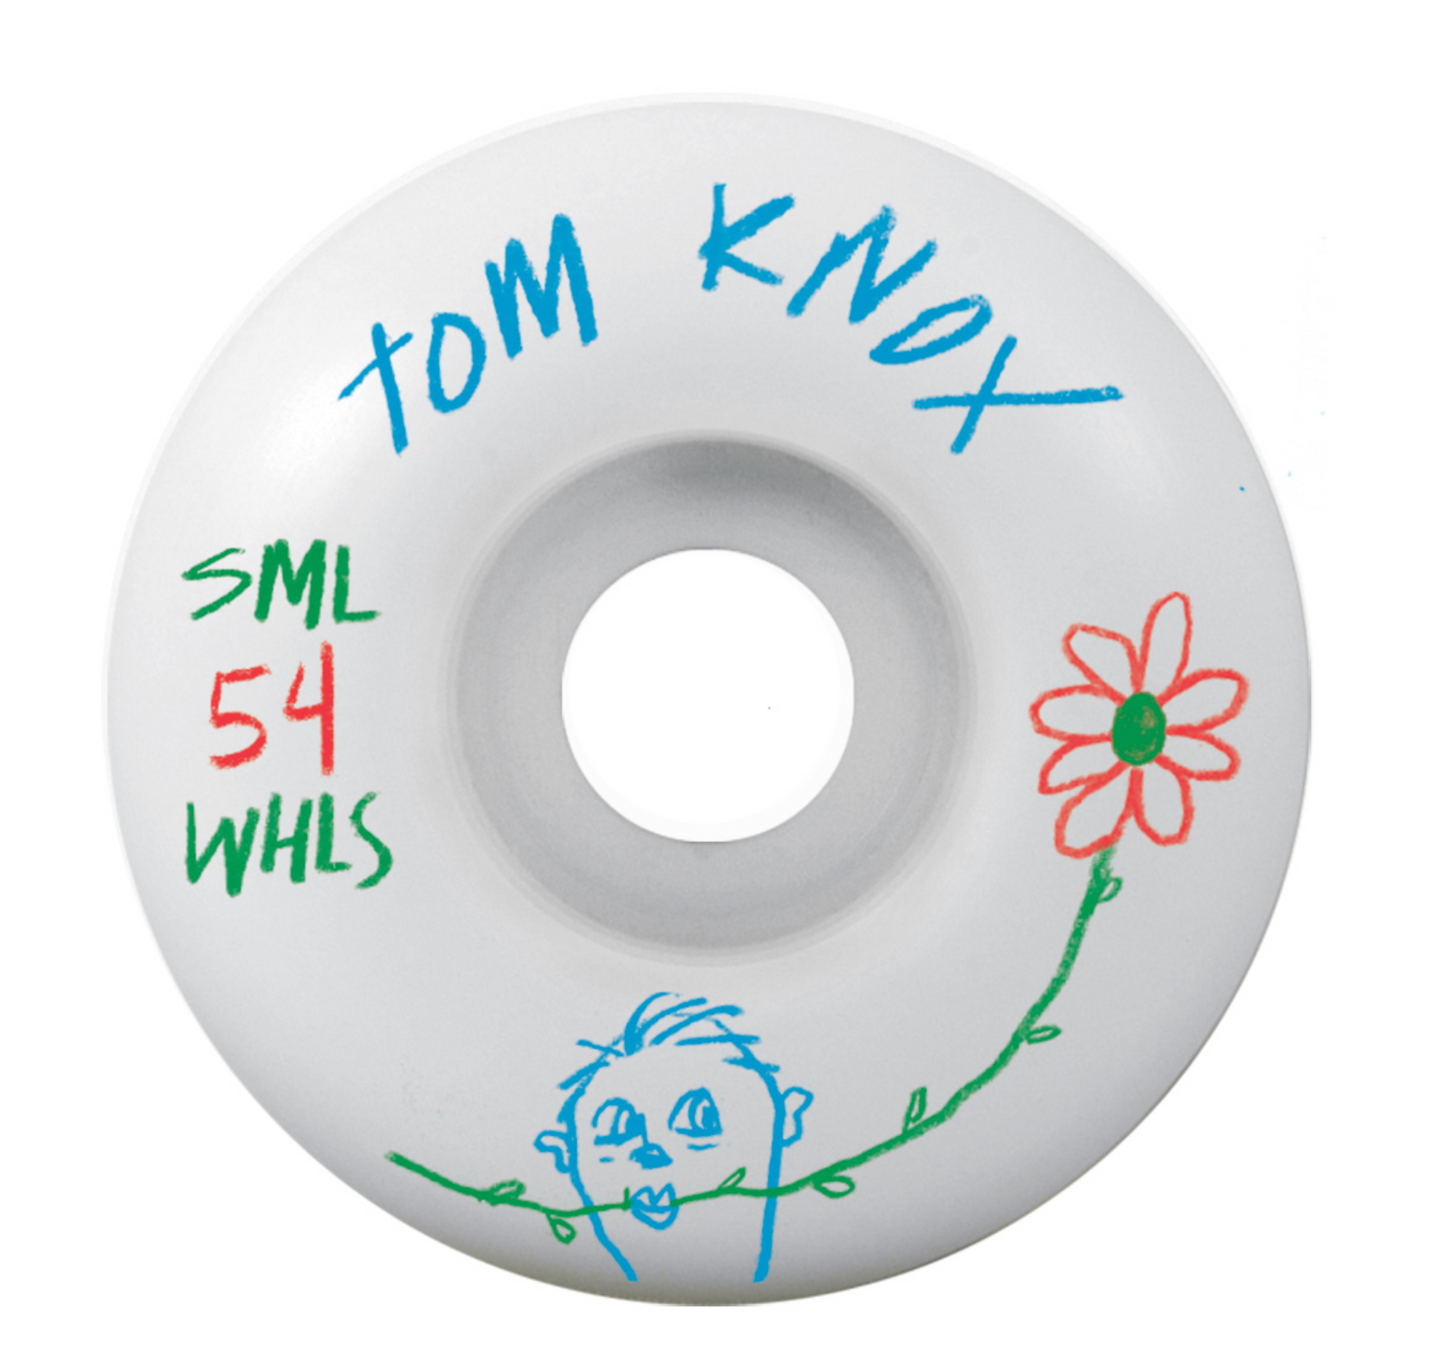 SML Wheels - Tom Knox Pencil Pushers Wheels (54mm)